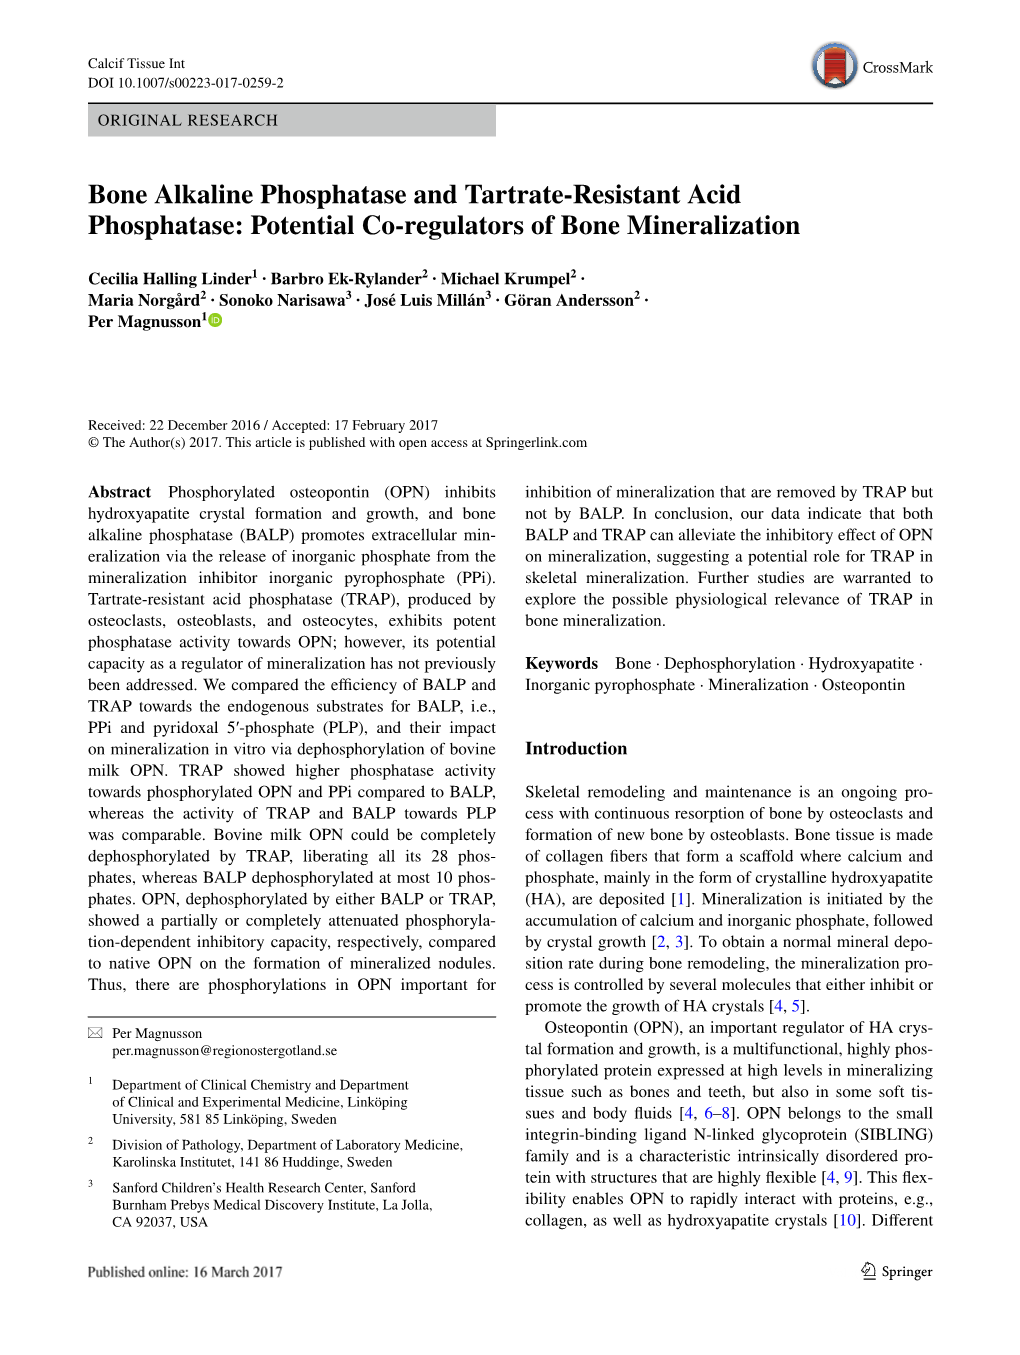 Bone Alkaline Phosphatase and Tartrate-Resistant Acid Phosphatase: Potential Co-Regulators of Bone Mineralization